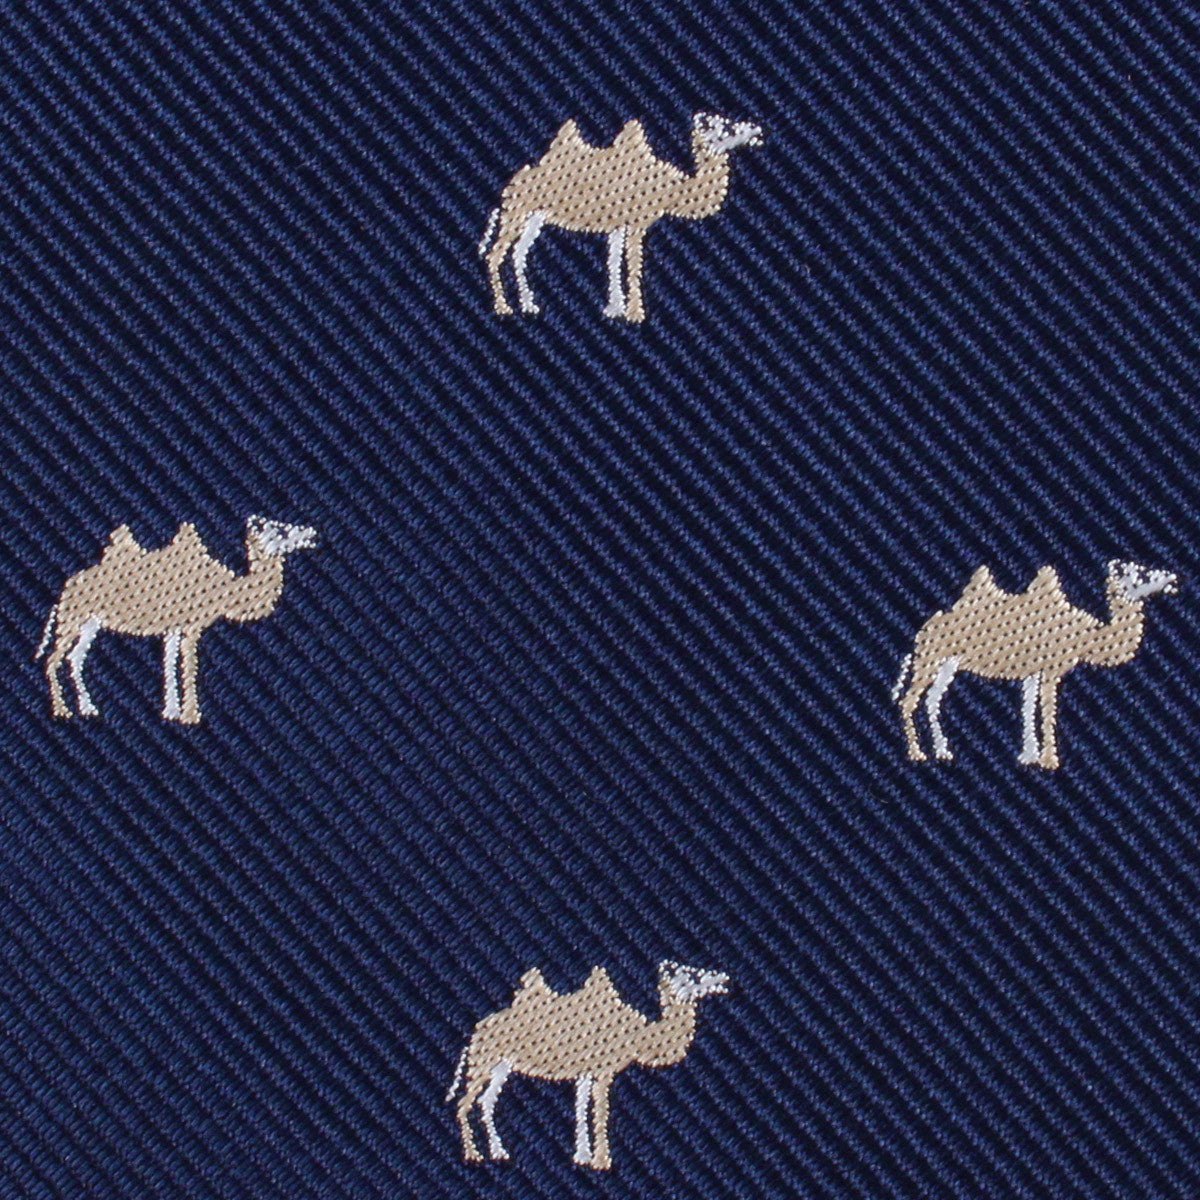 Mongolian Camel Fabric Skinny Tie